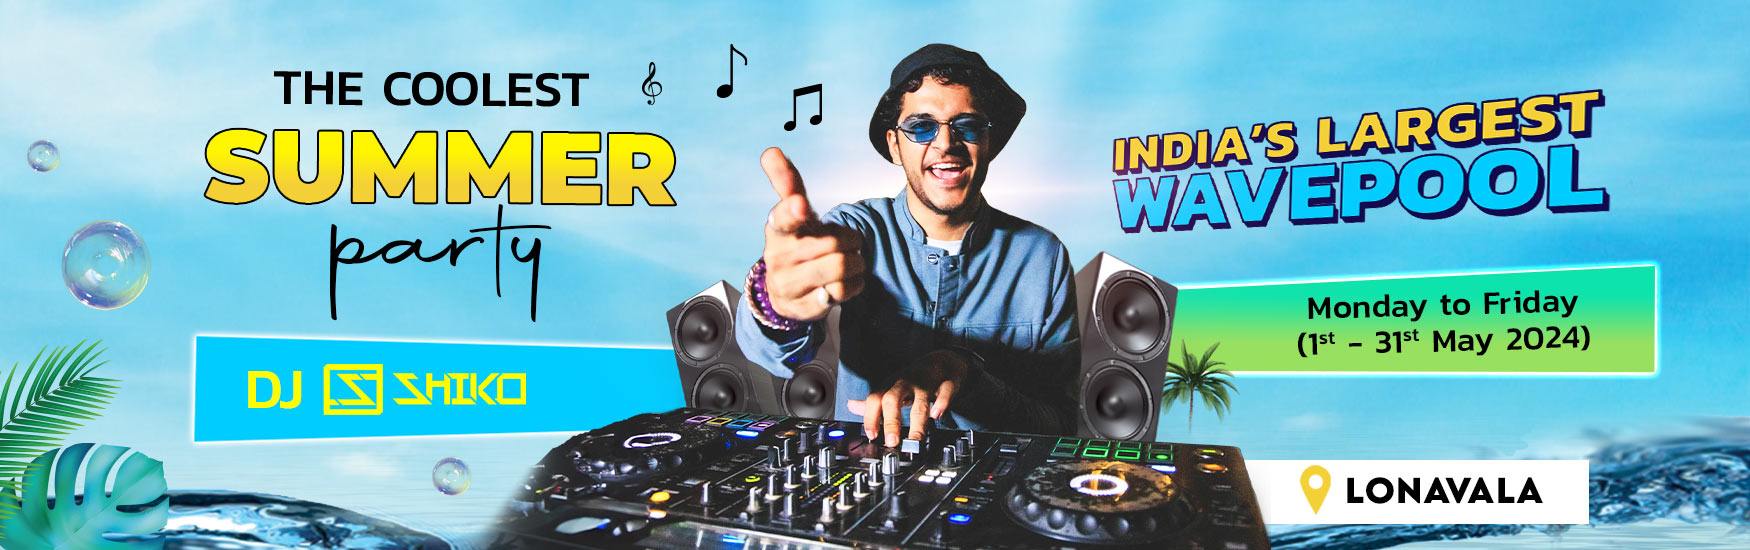 Coolest summer party with DJ Shiko at India's largest Wavepool Lonavala